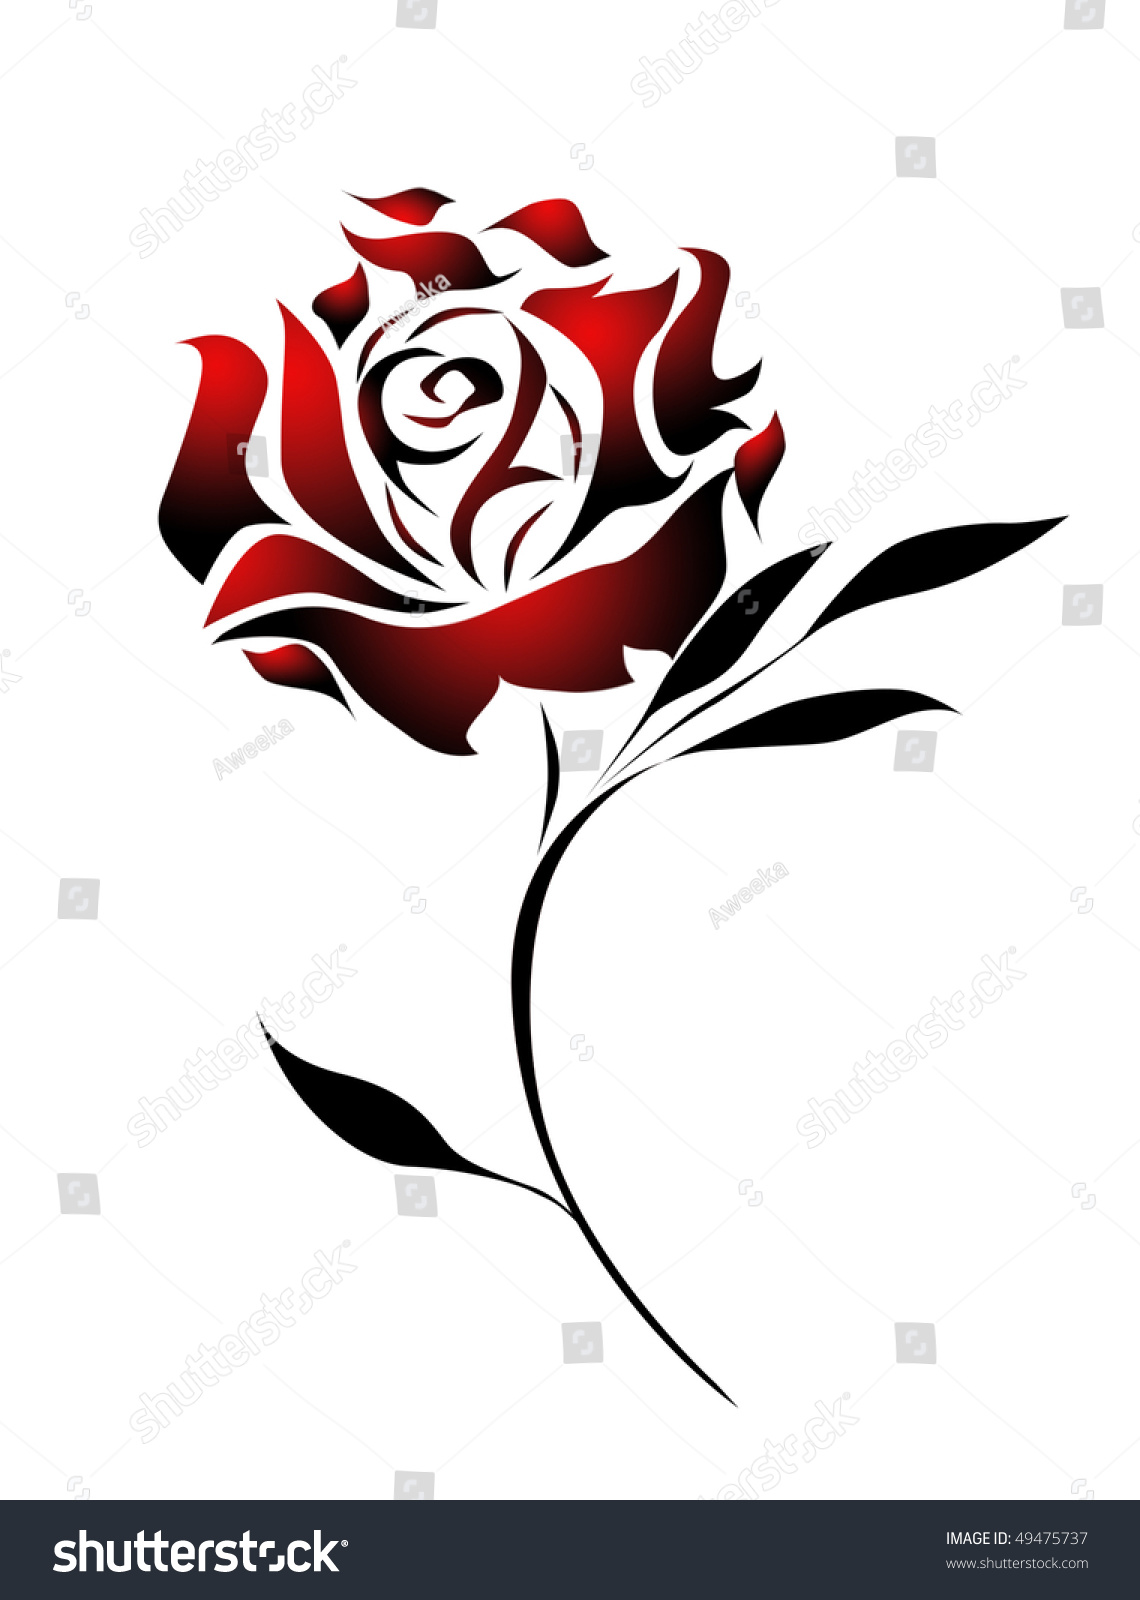 Red Rose Tattoo Design Path Stock Illustration 49475737 ...